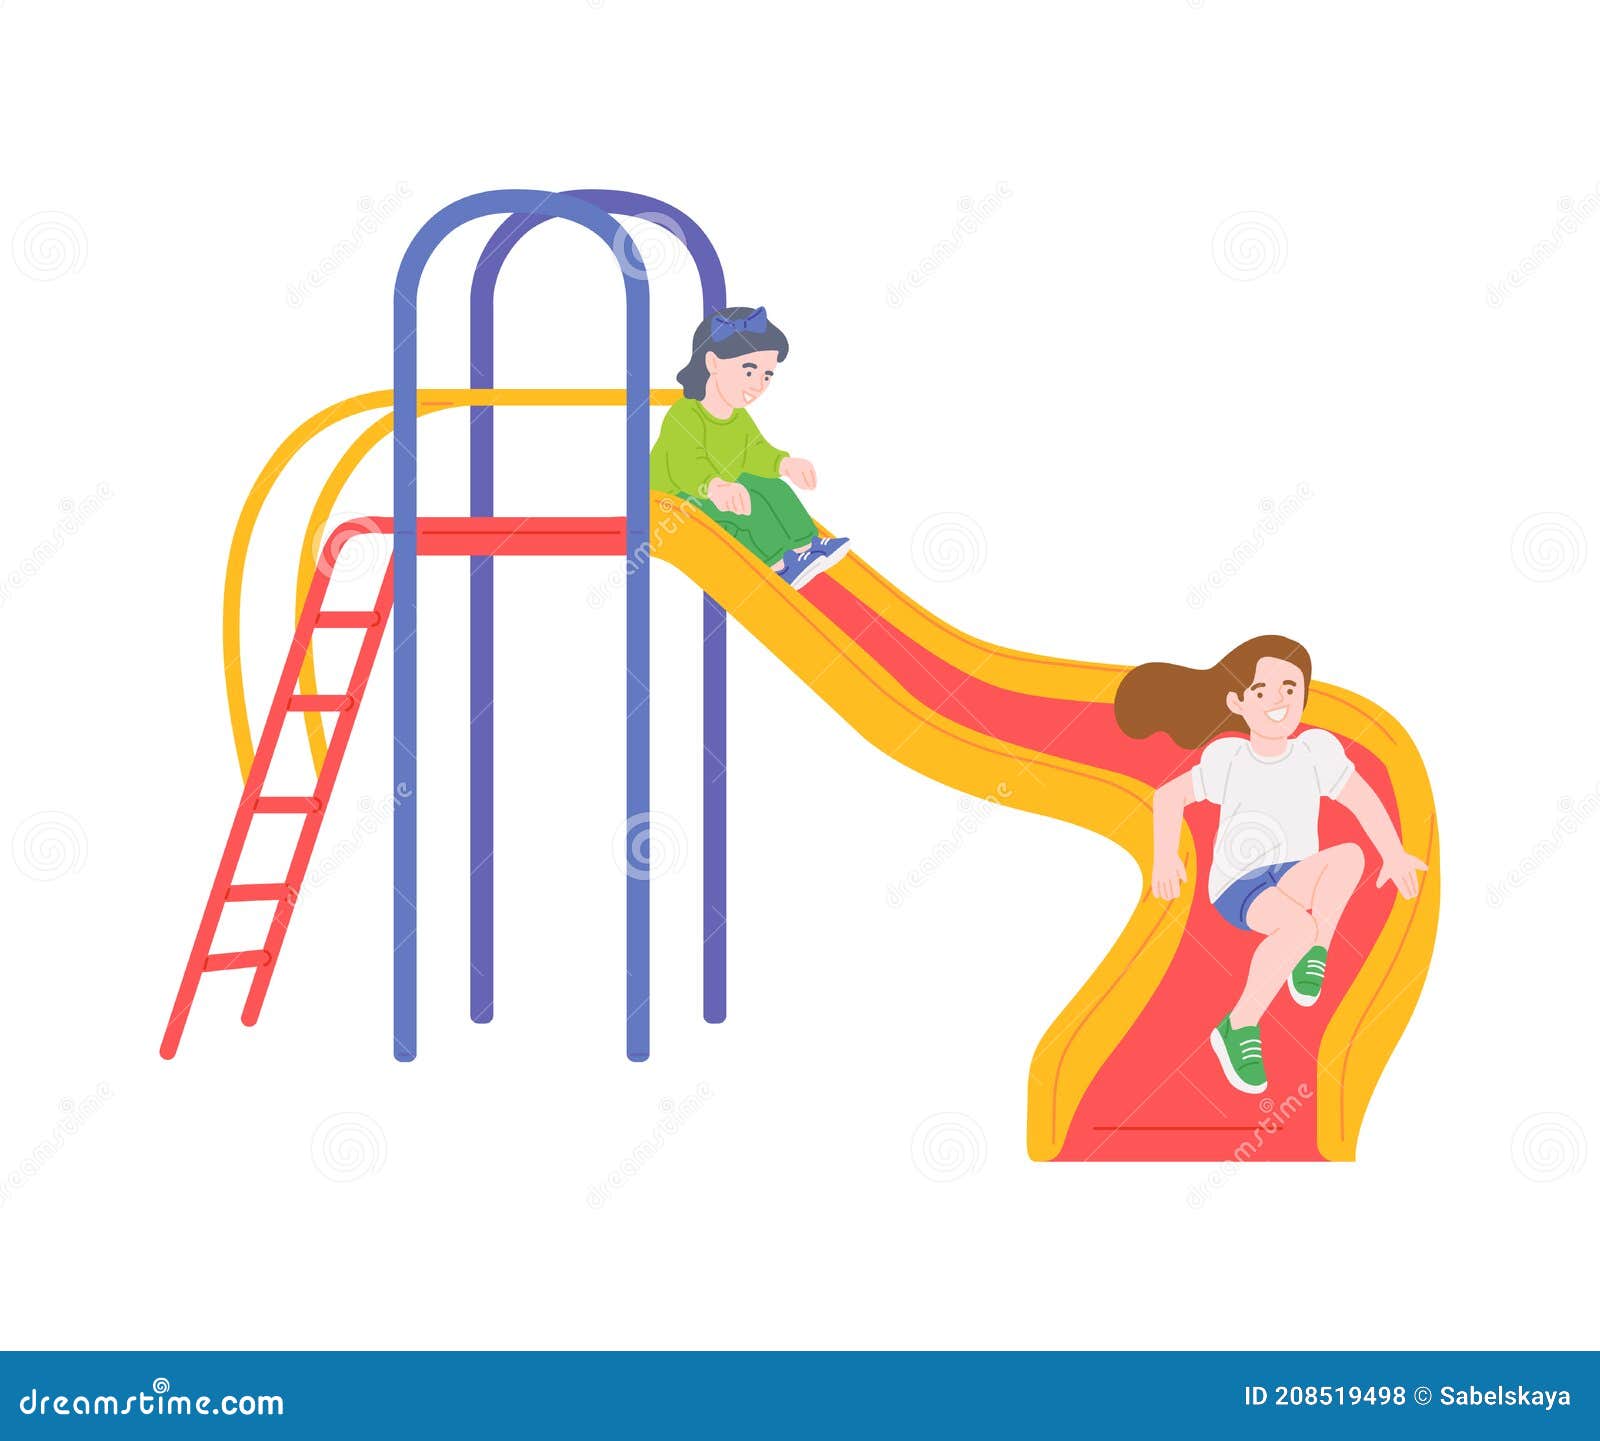 Kids Playing on a Slide - Cartoon Children Sliding Down Colorful Slide  Stock Vector - Illustration of playful, slide: 208519498